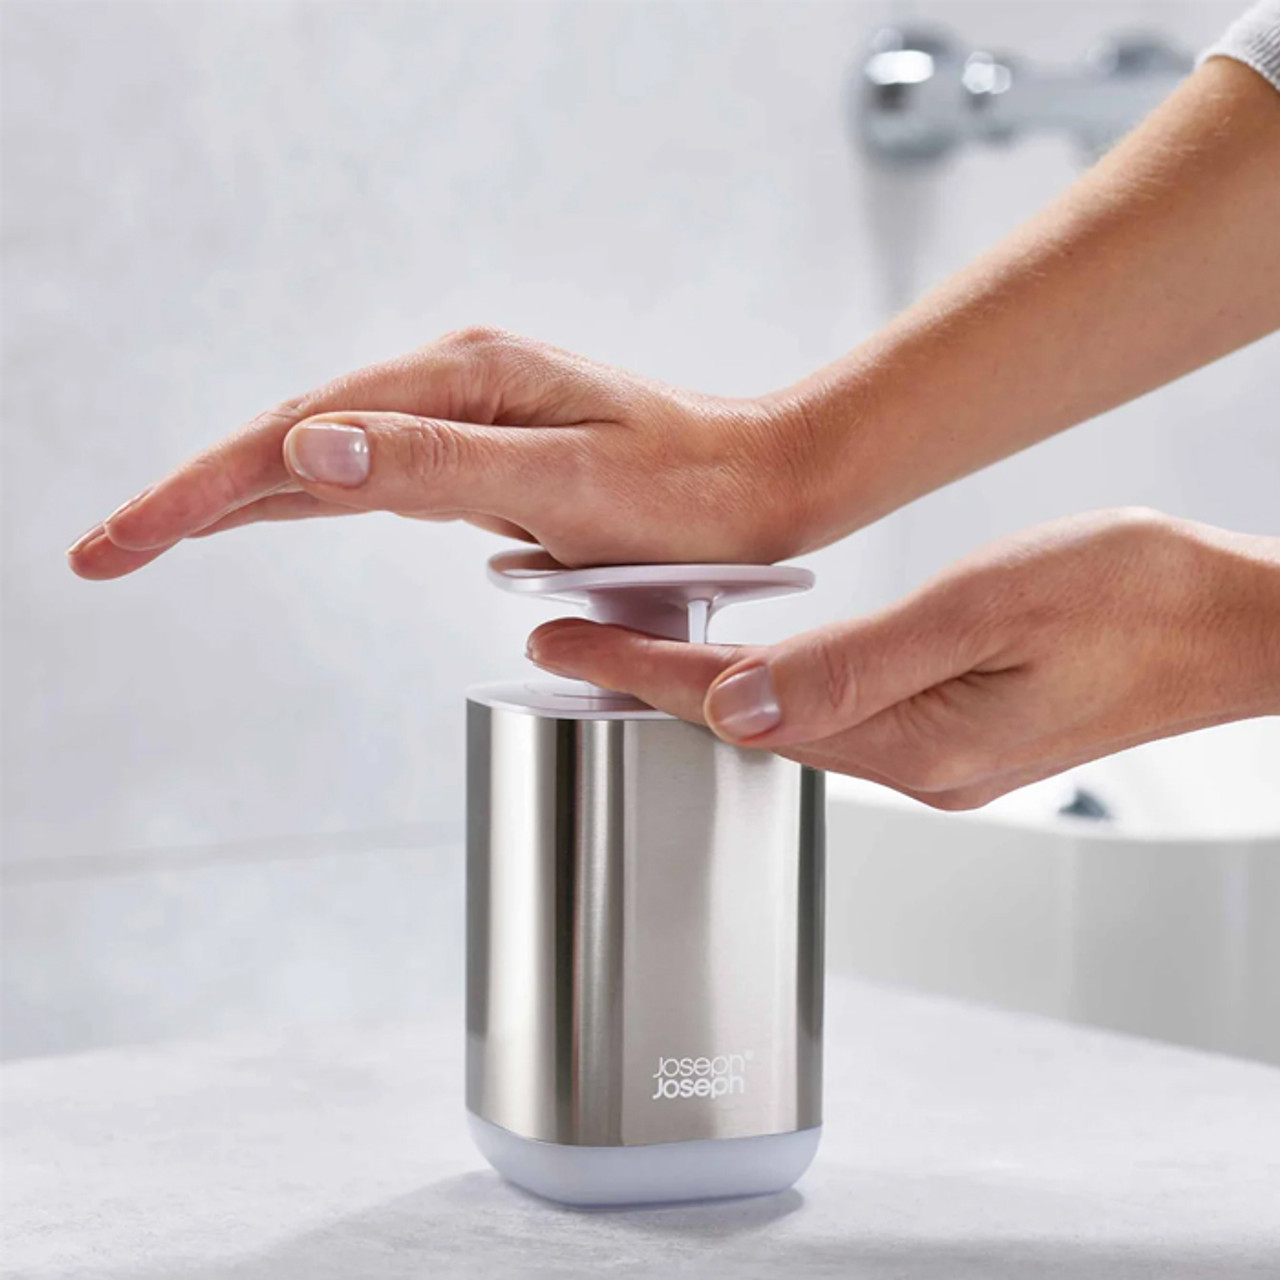 Presto™ Stainless-steel Hygienic Soap Dispenser *in-store